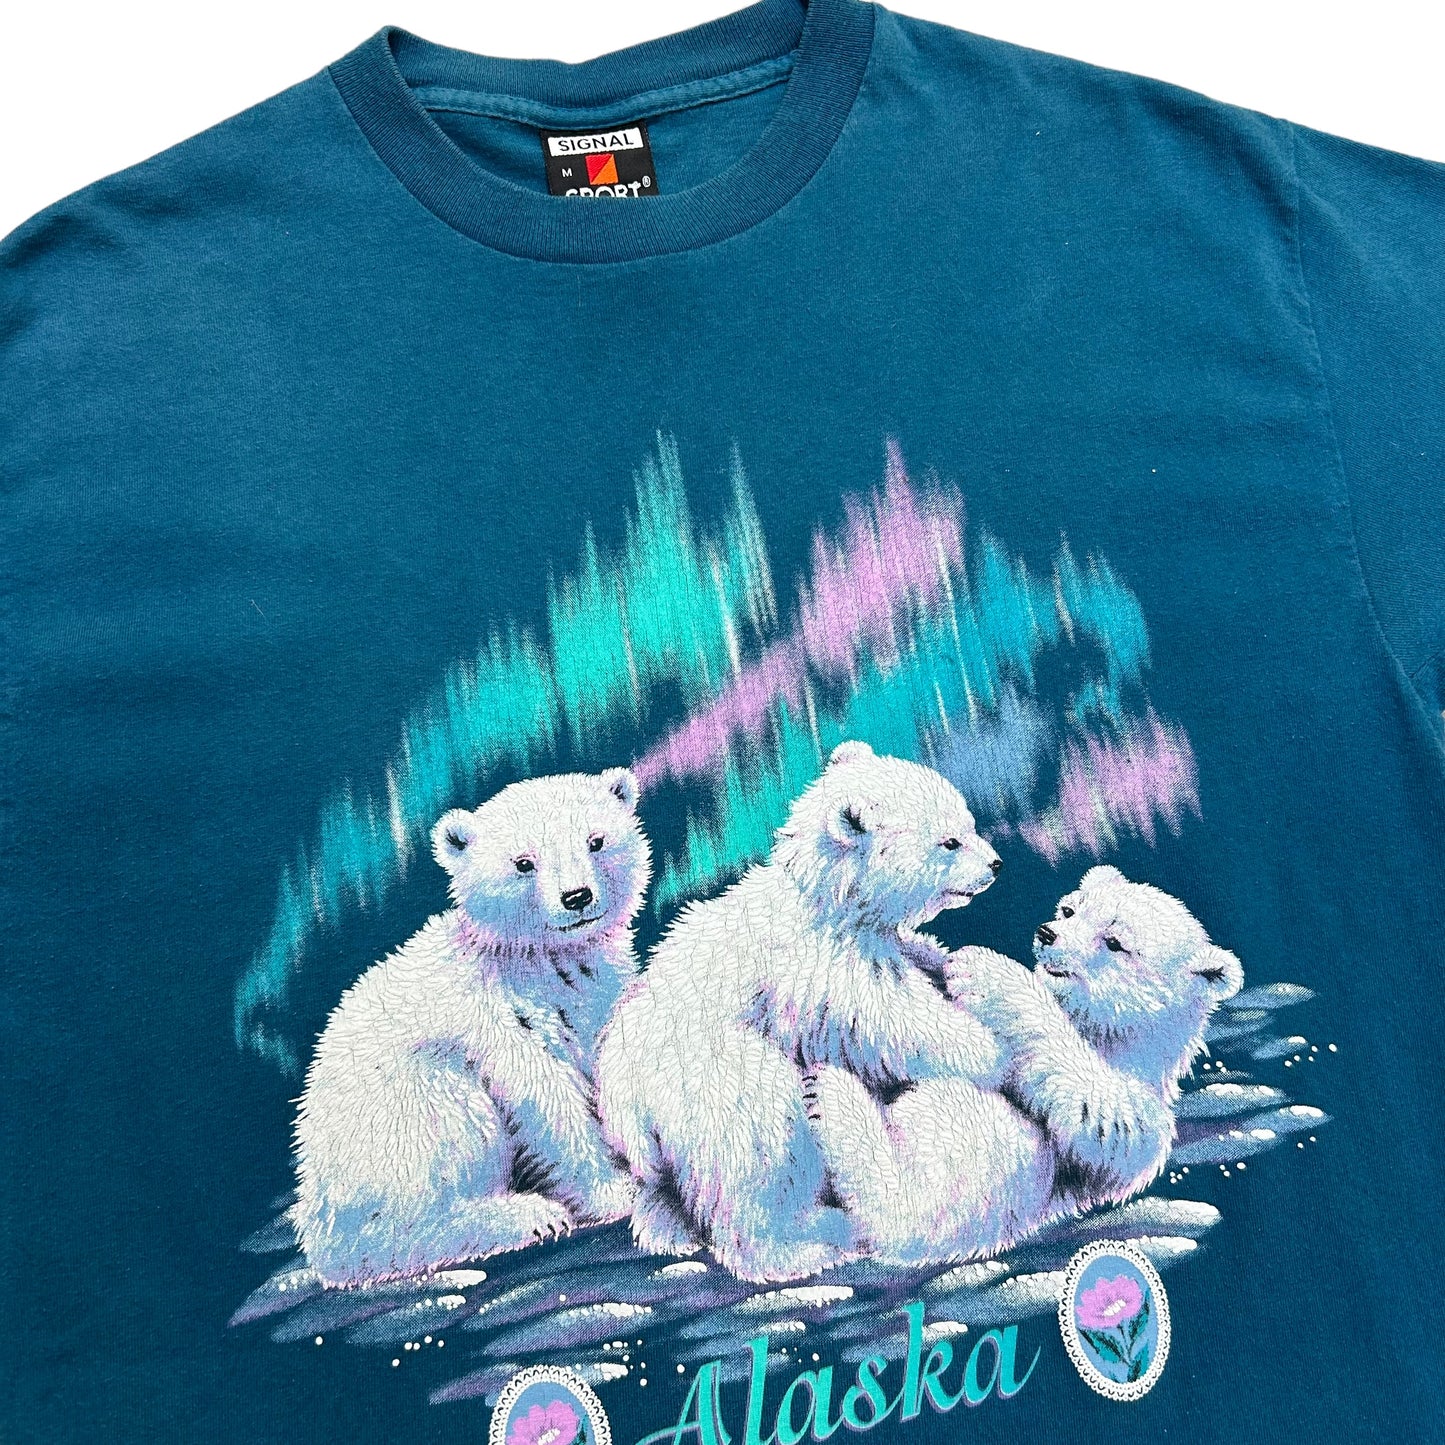 Vintage 1990s Alaska Polar Bears Blue Graphic T-Shirt - Size Medium